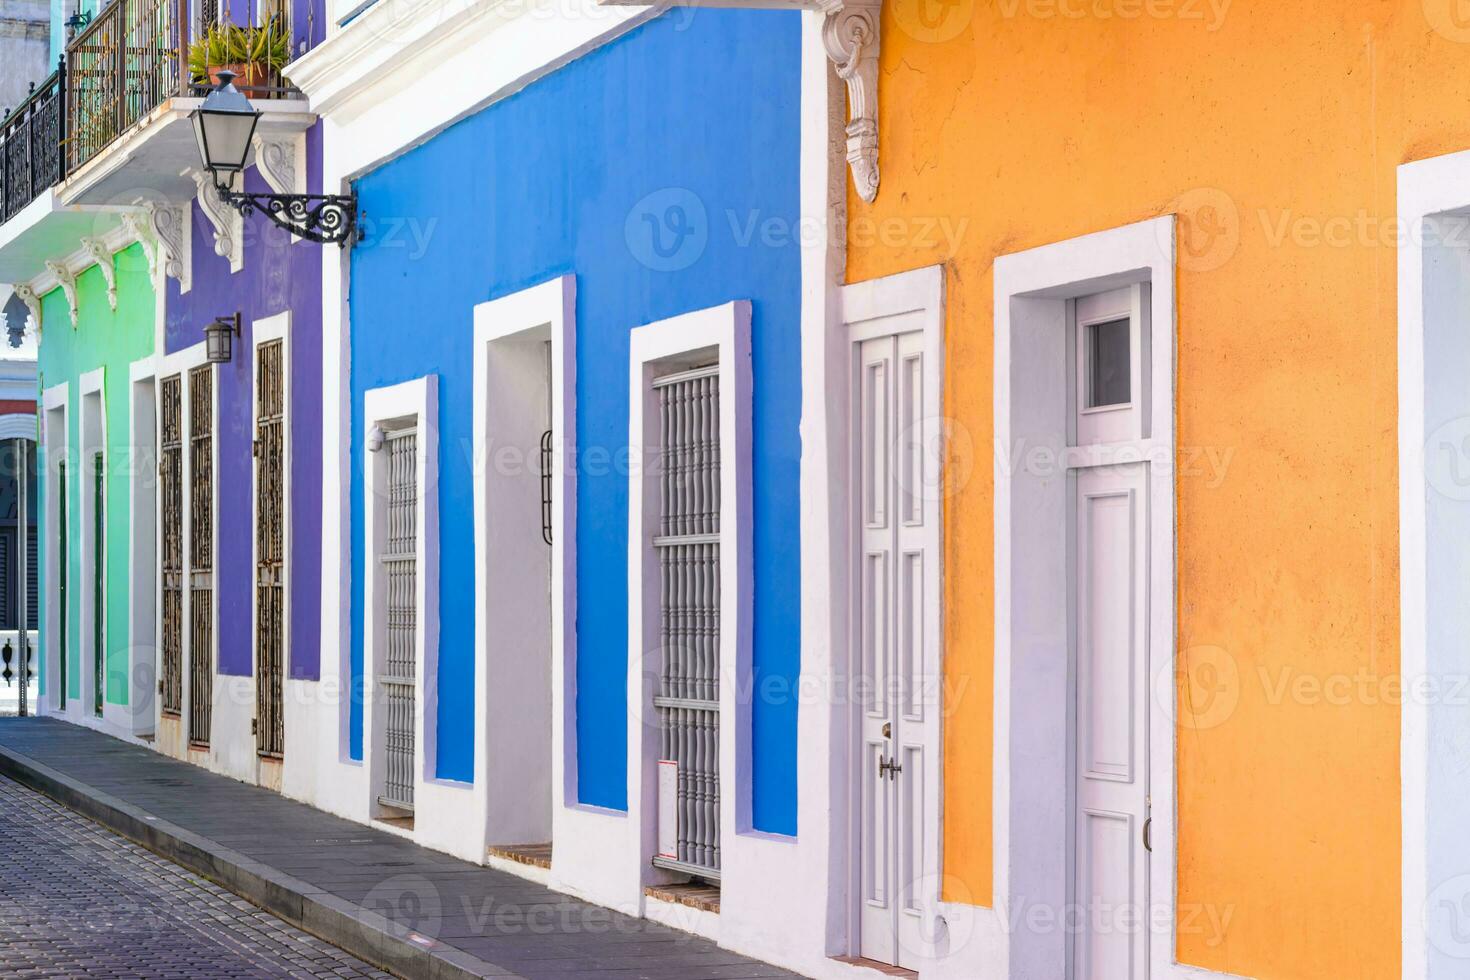 puerto rico kleurrijk koloniaal architectuur in historisch stad centrum foto